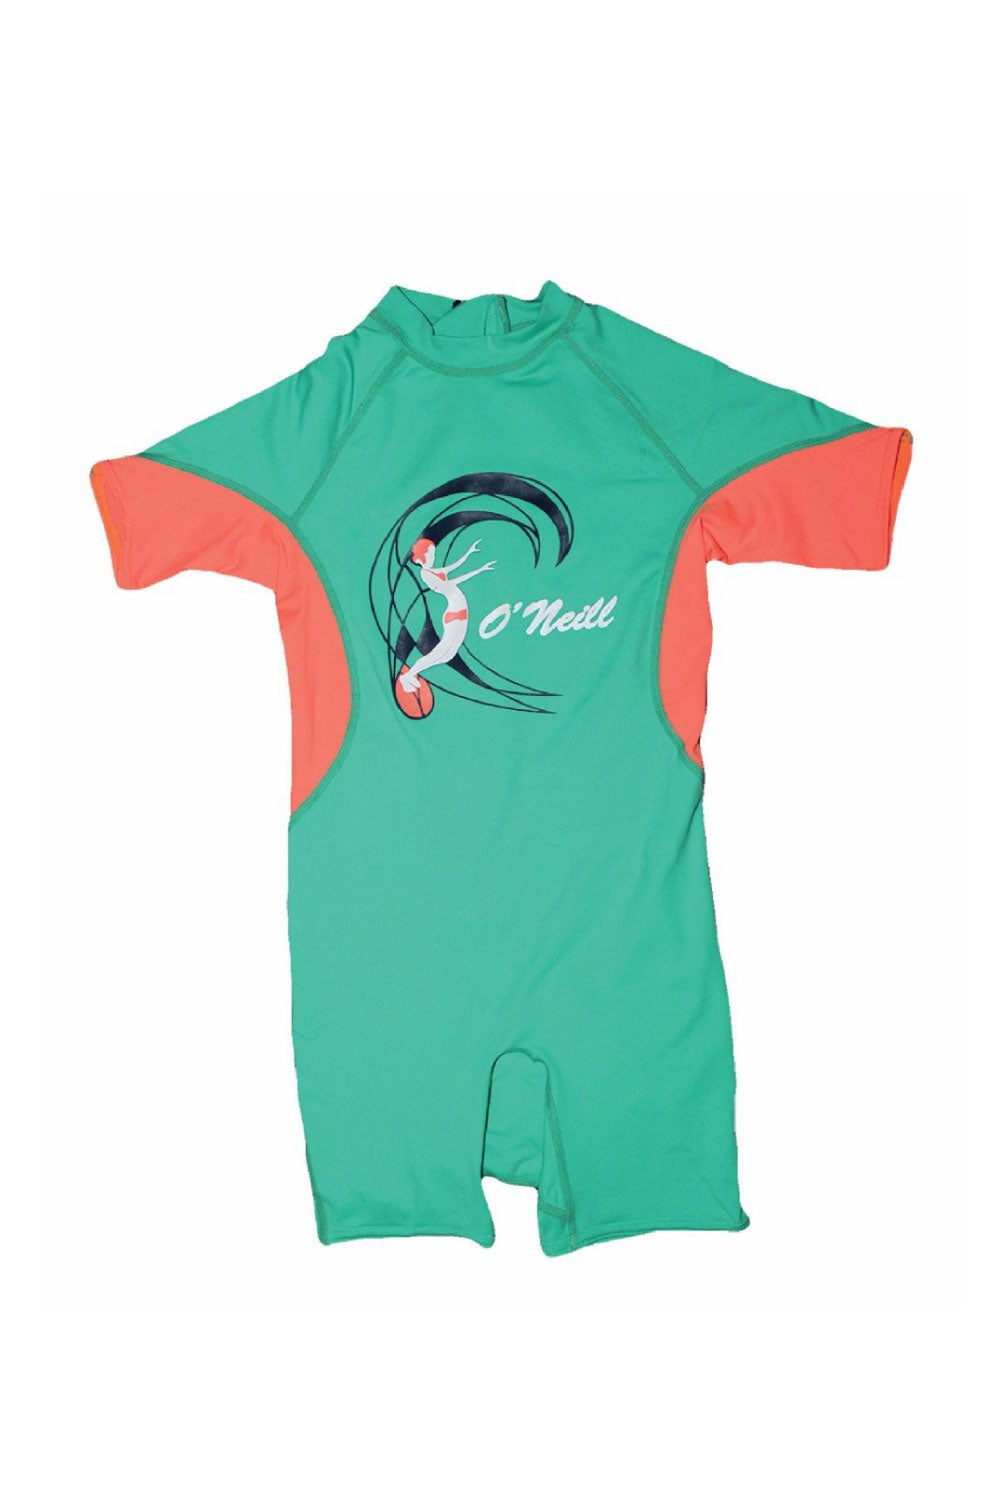 O'Neill Girls Toddler Ozone Short Sleeve Spring Rash Suit - Seaglass Papaya Cobalt